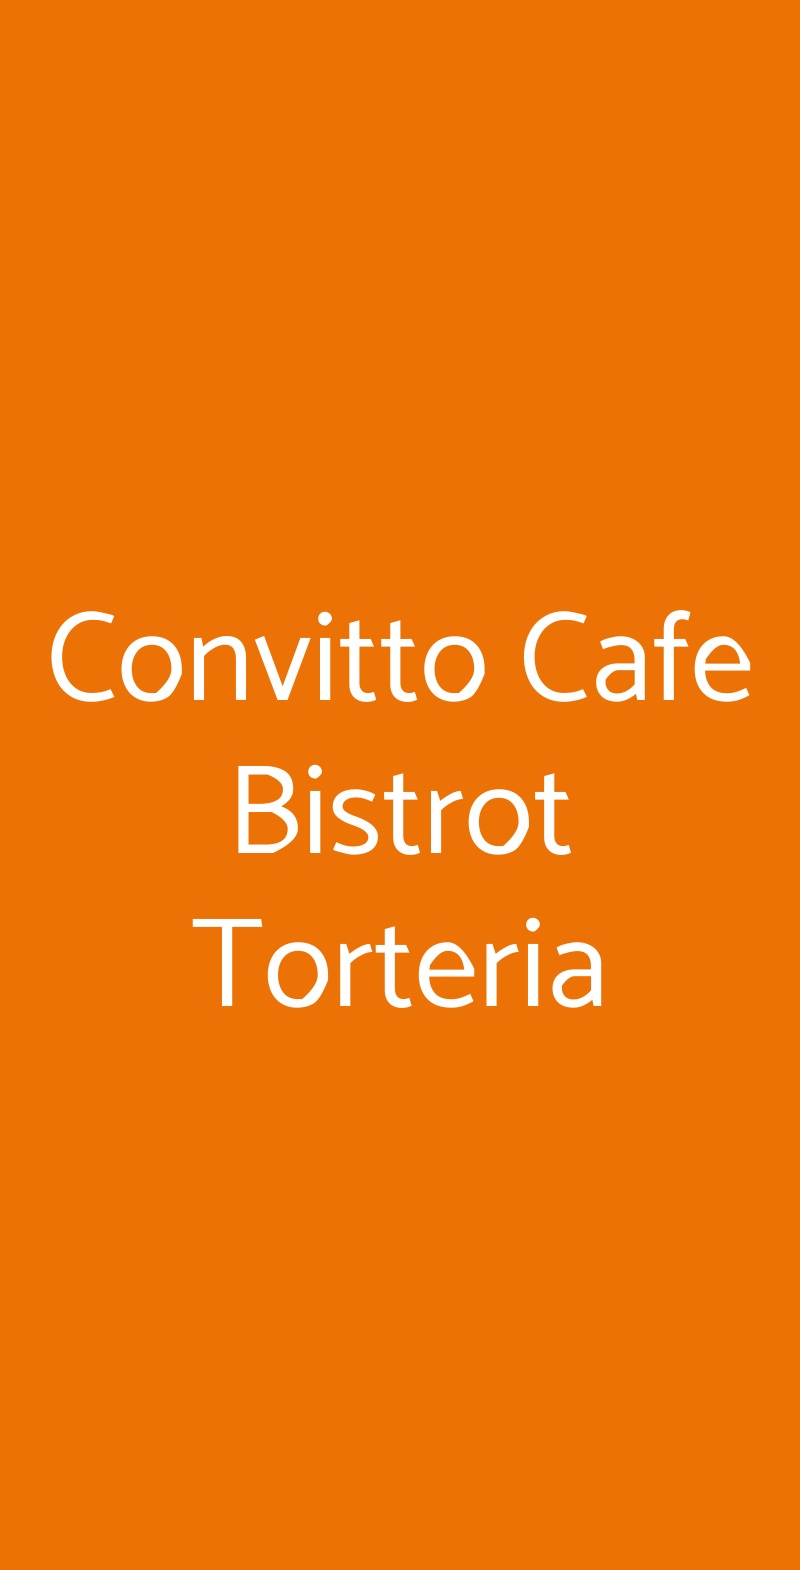 Convitto Cafe Bistrot Torteria Torino menù 1 pagina